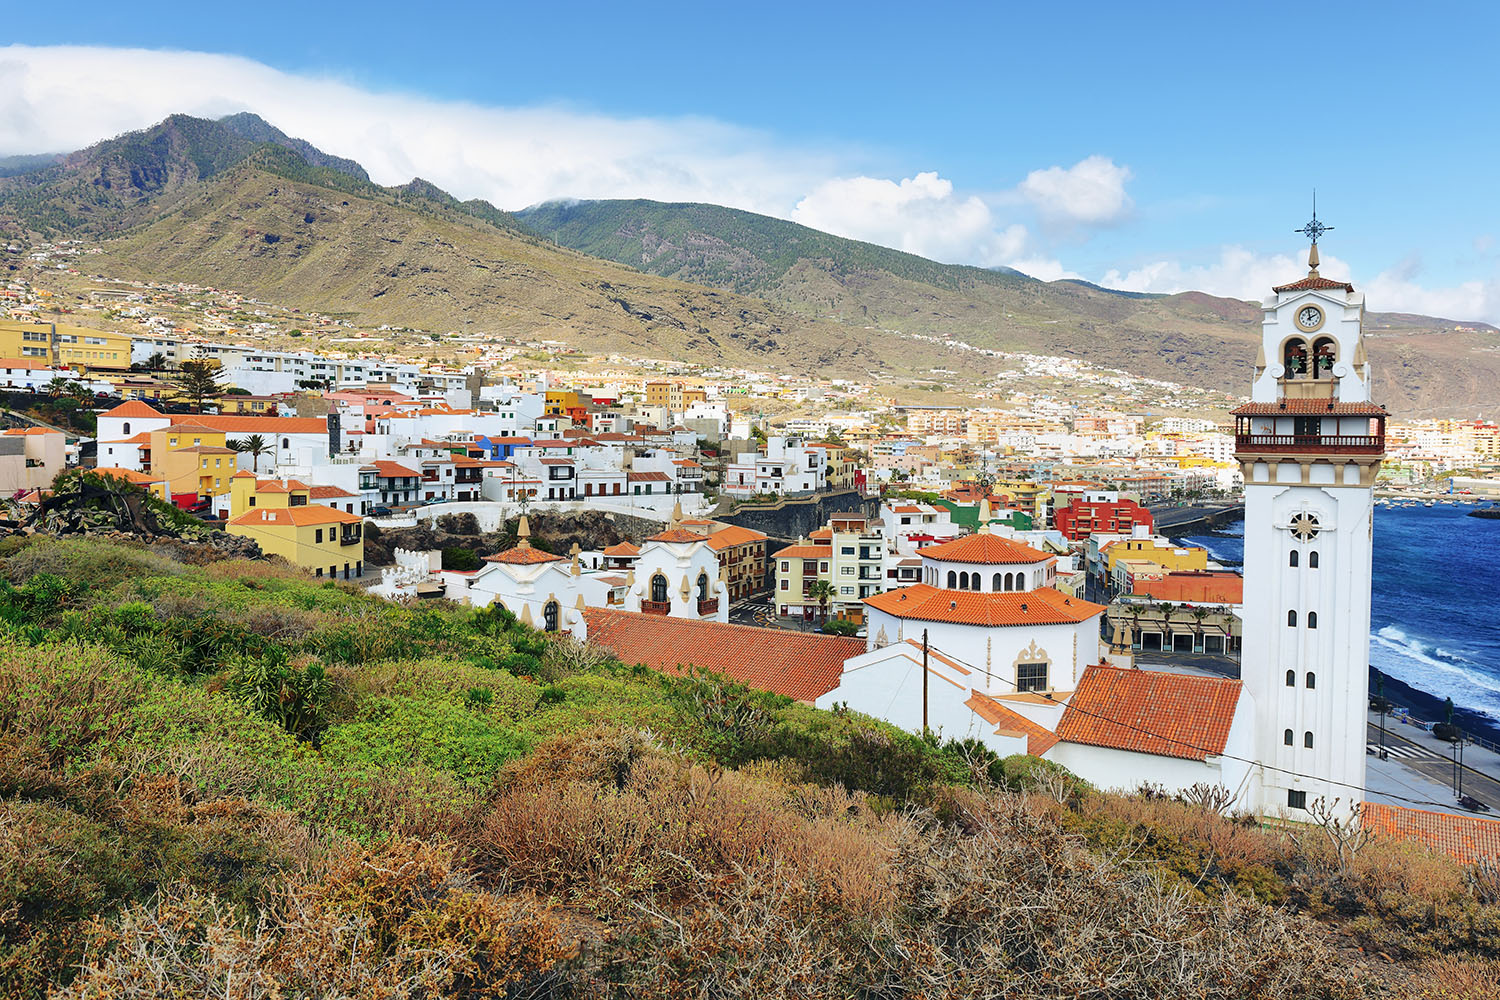 The city of Candelaria, Tenerife